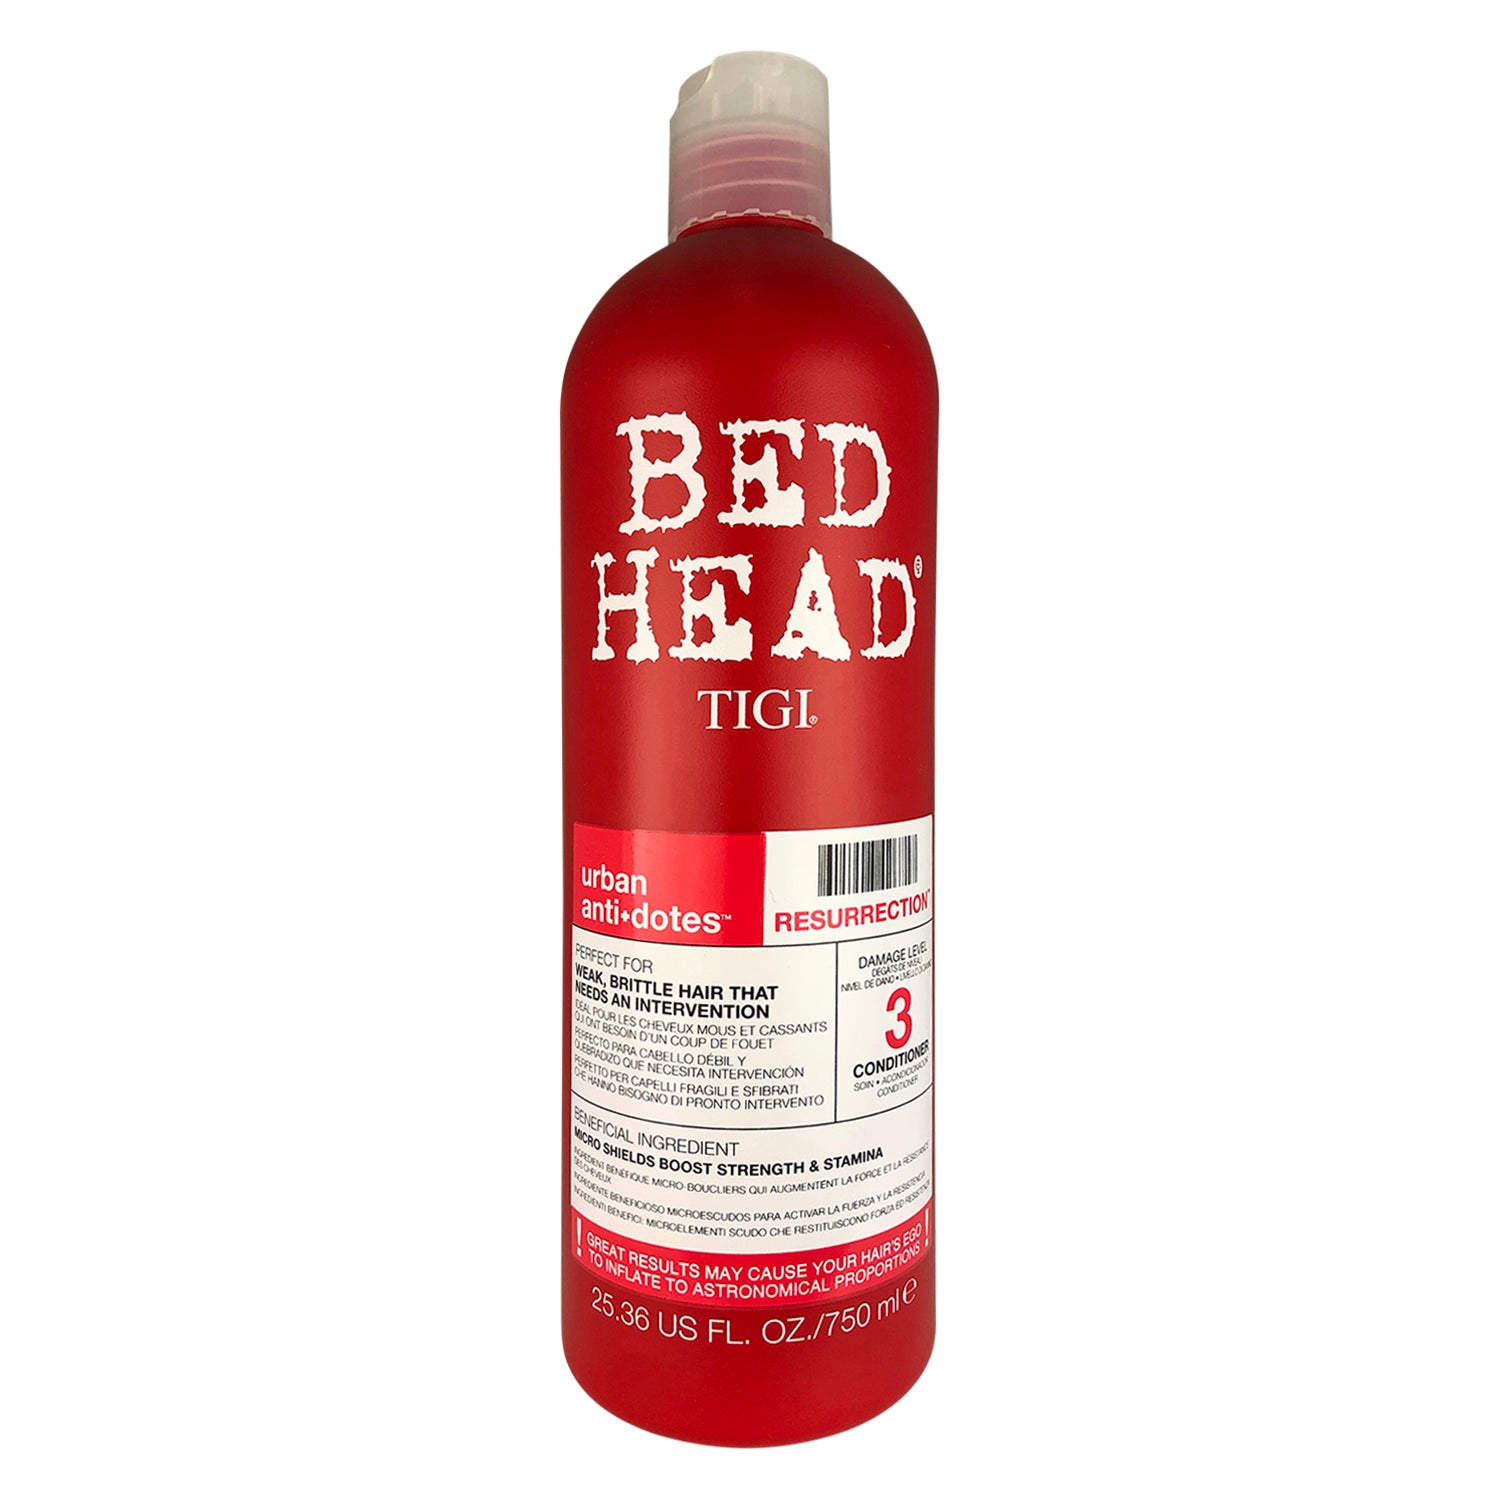 Bed Head Tigi Urban Antidotes Resurrection Hair Conditioner #3 25.36 oz For Weak Brittle Hair with damage level 3